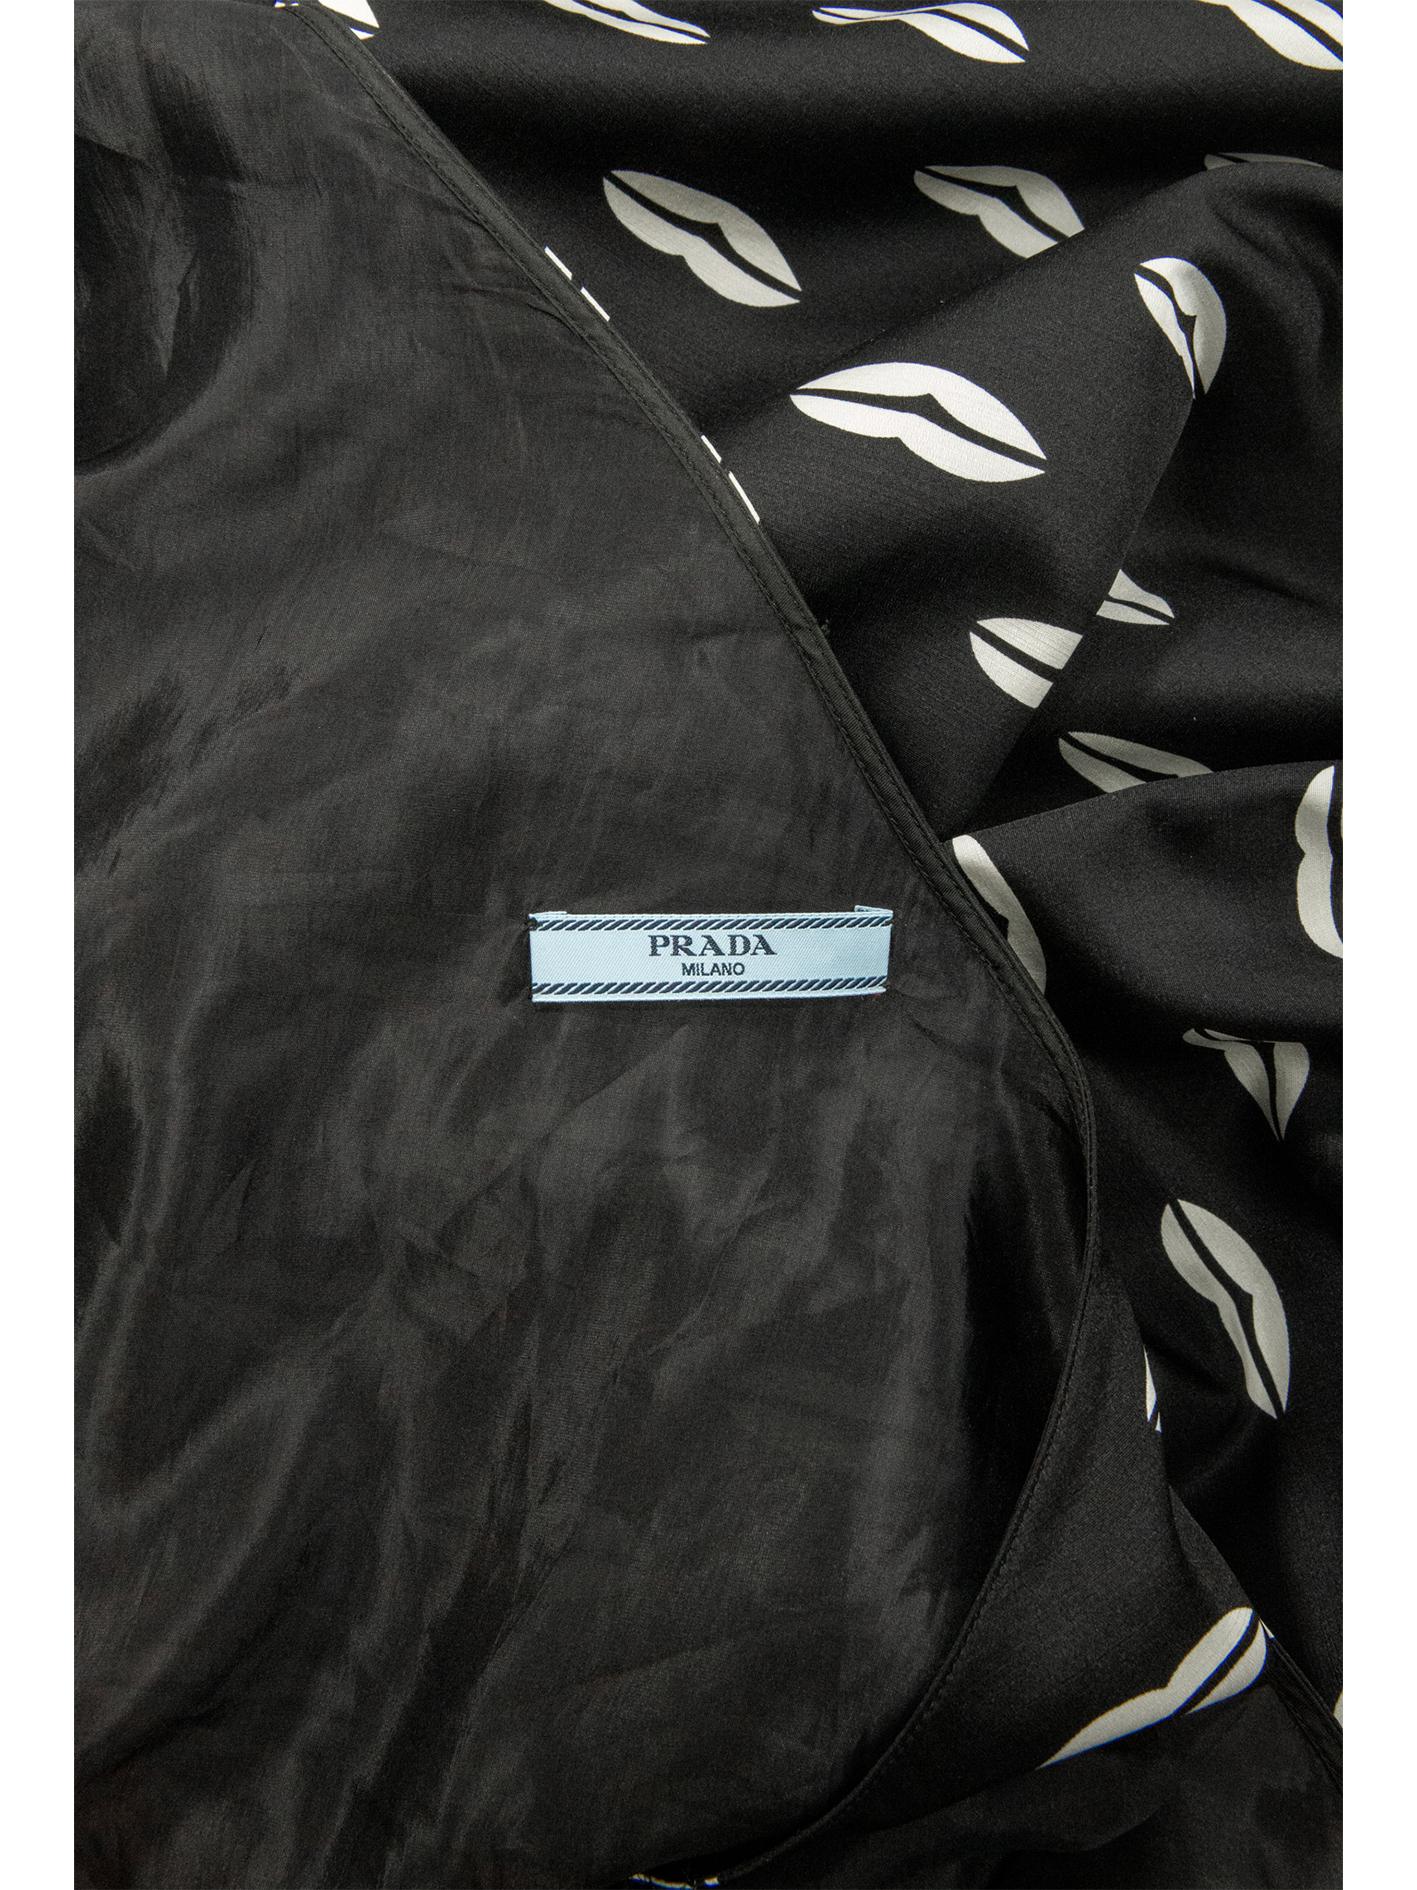 Prada Silk Wrap Dress In Good Condition For Sale In London, GB